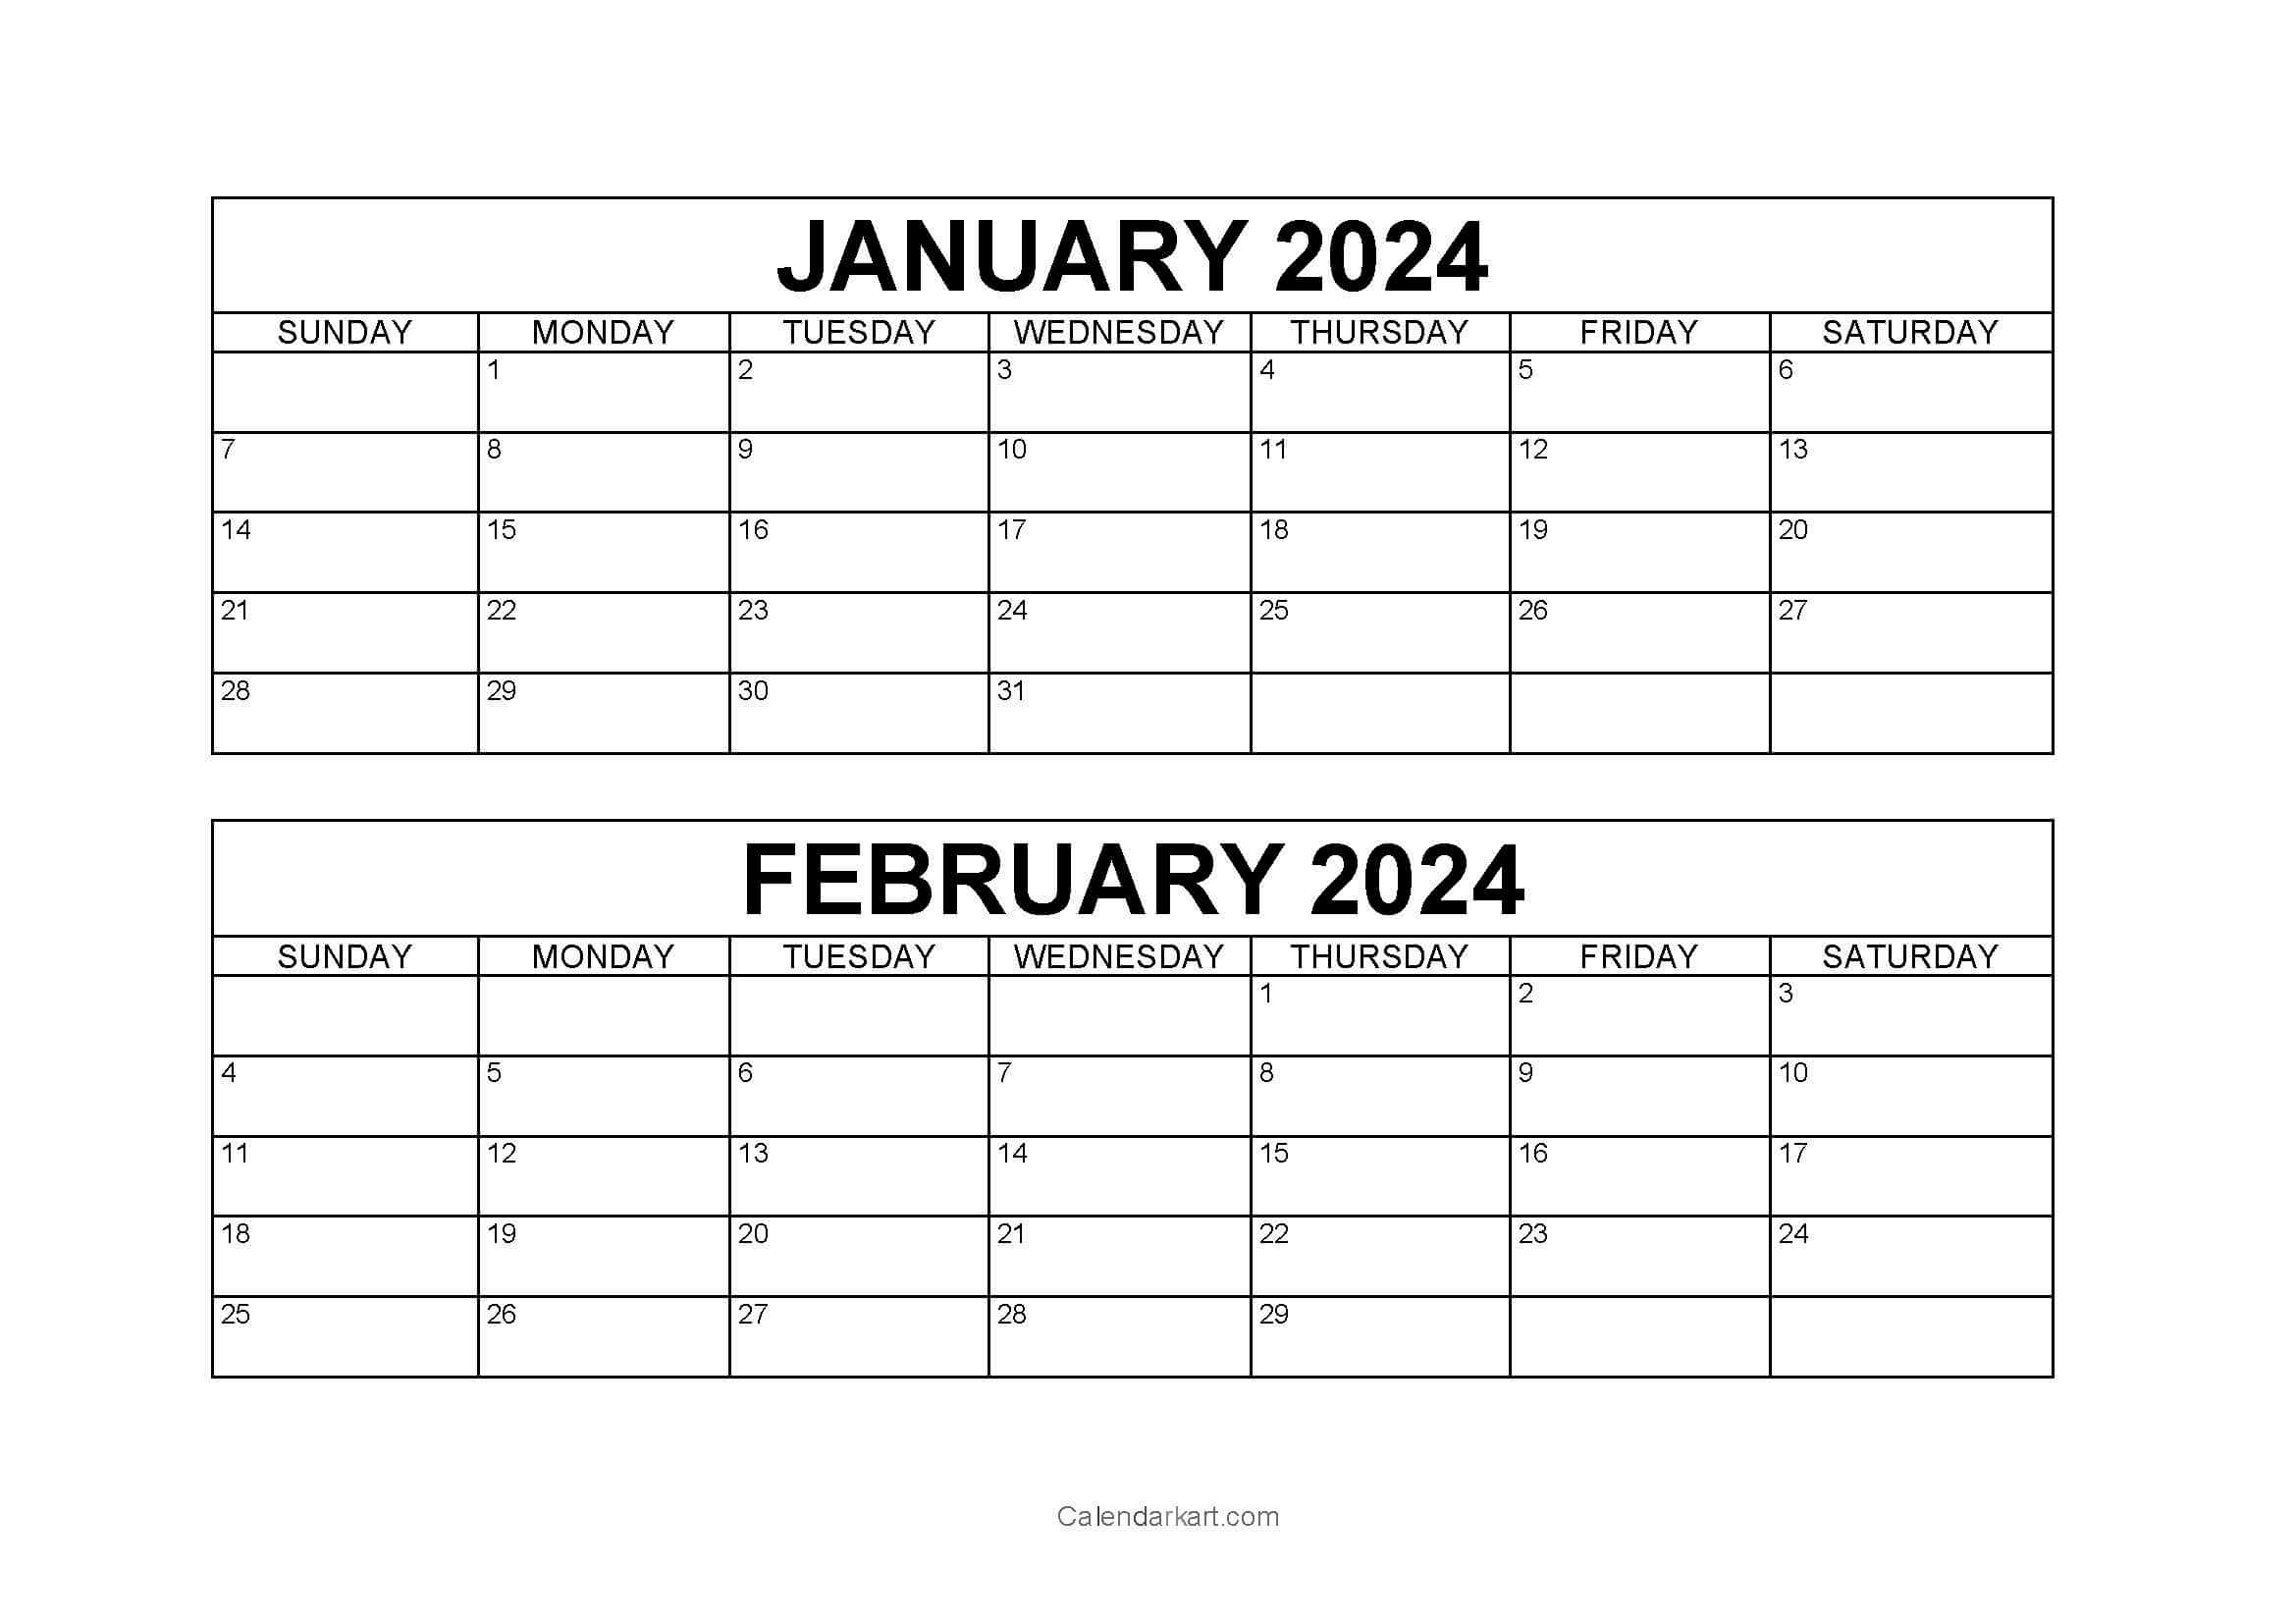 Free Printable January February Calendar 2024 - Calendarkart | Printable Calendar 2024 January And February